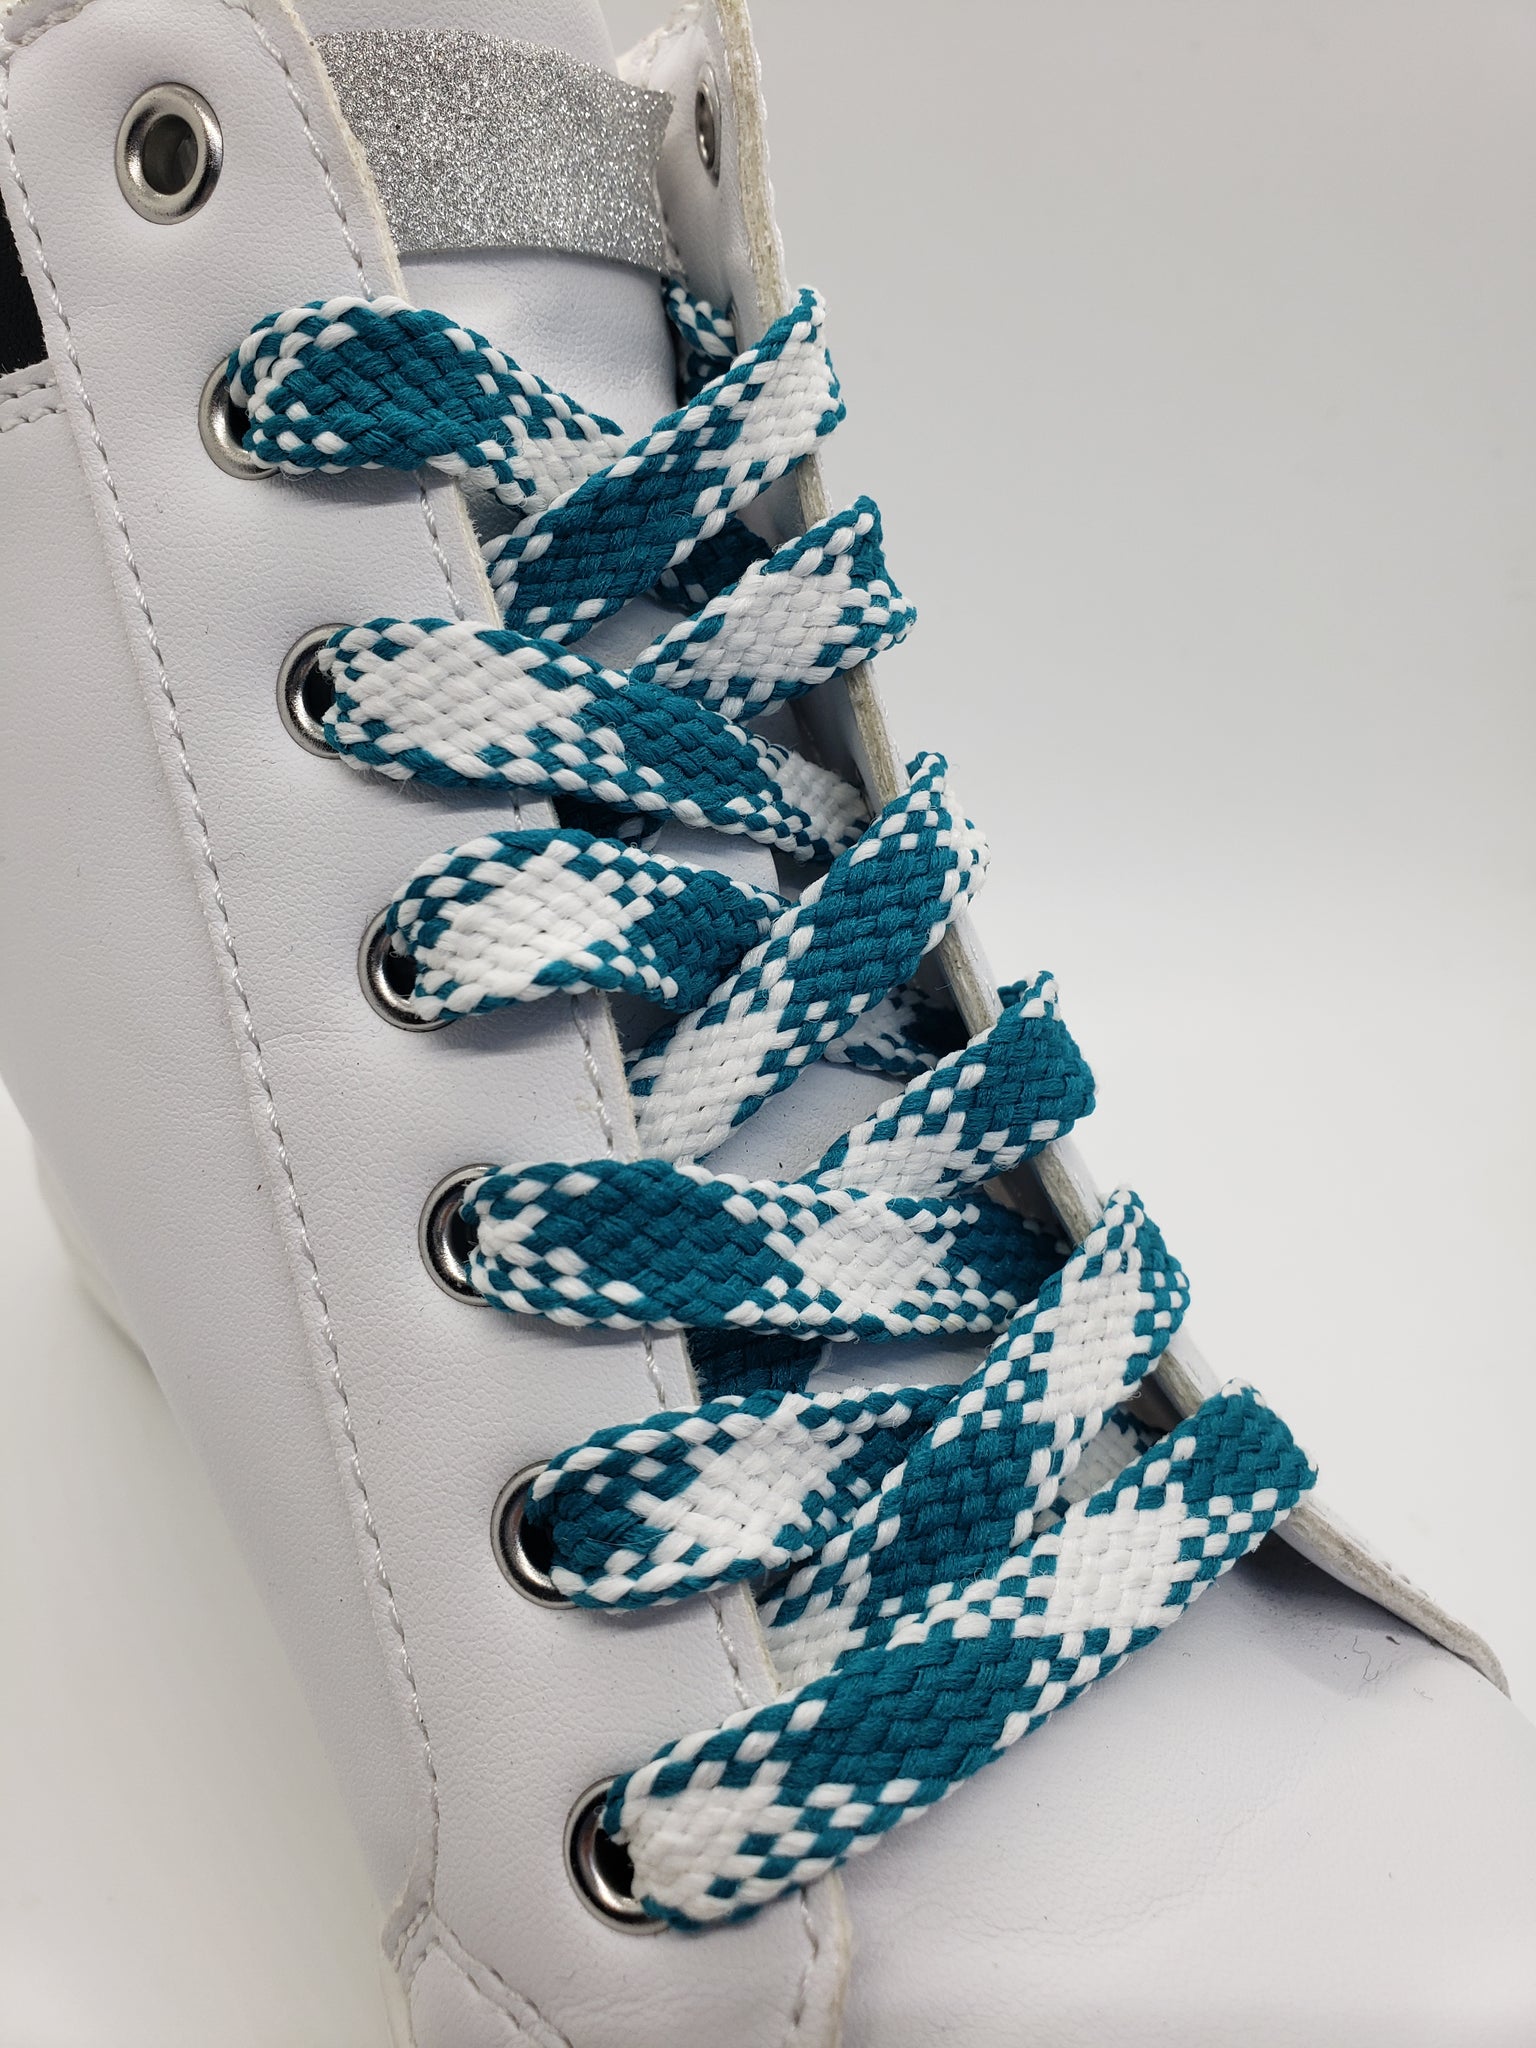 Flat Argyle Shoelaces - Teal and White